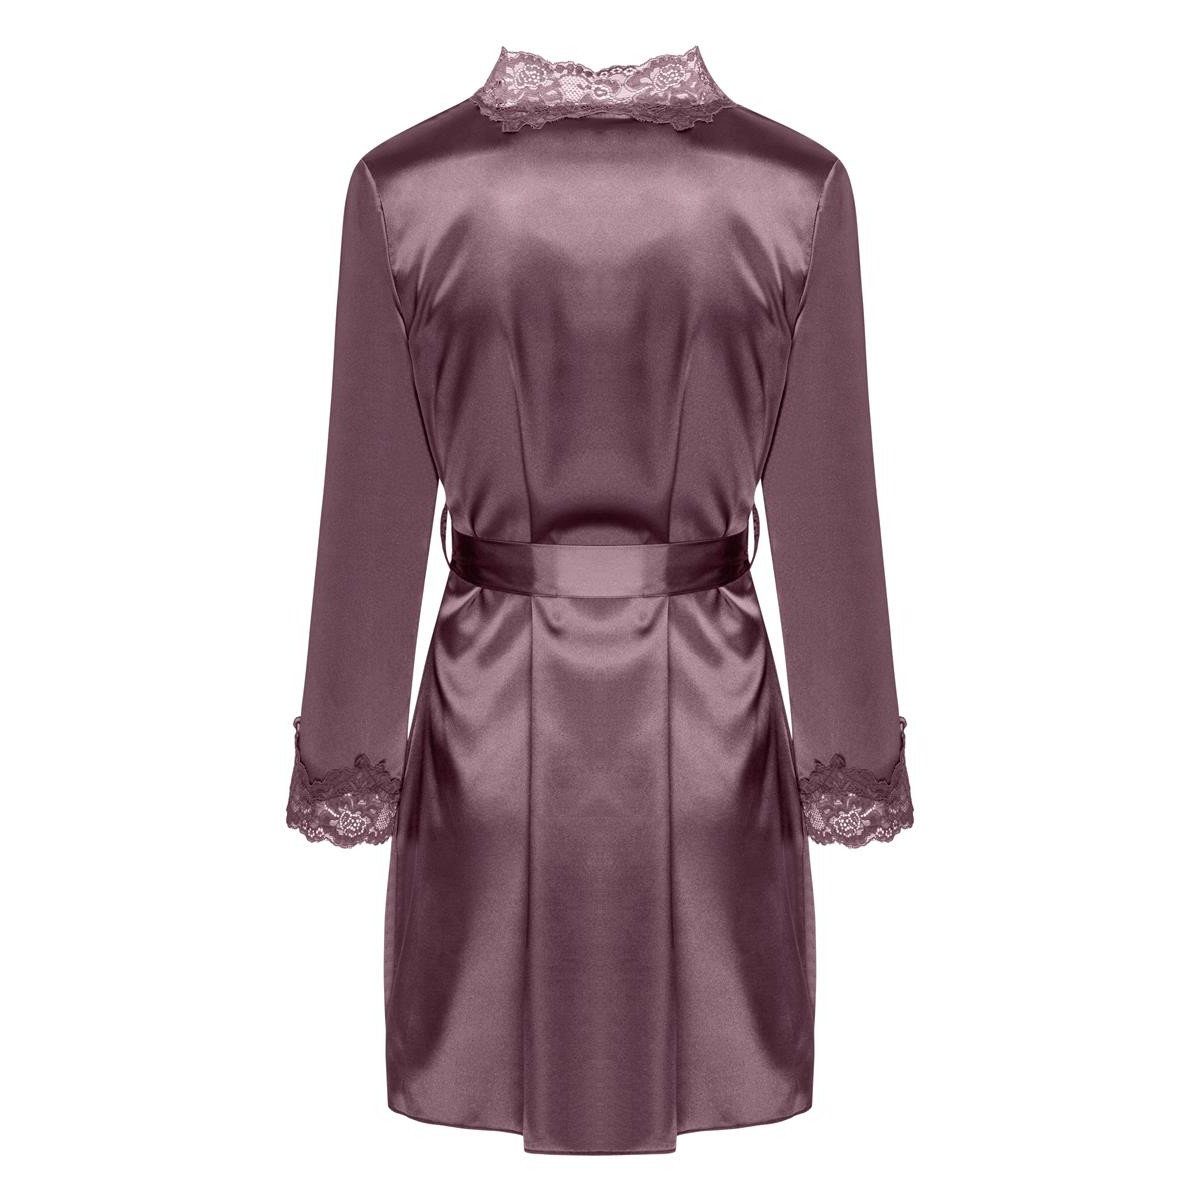 Corsetti LC chemise/peignoir (L/XL,S/M) Nachthemd violett Fashion - Jacqueline Livco